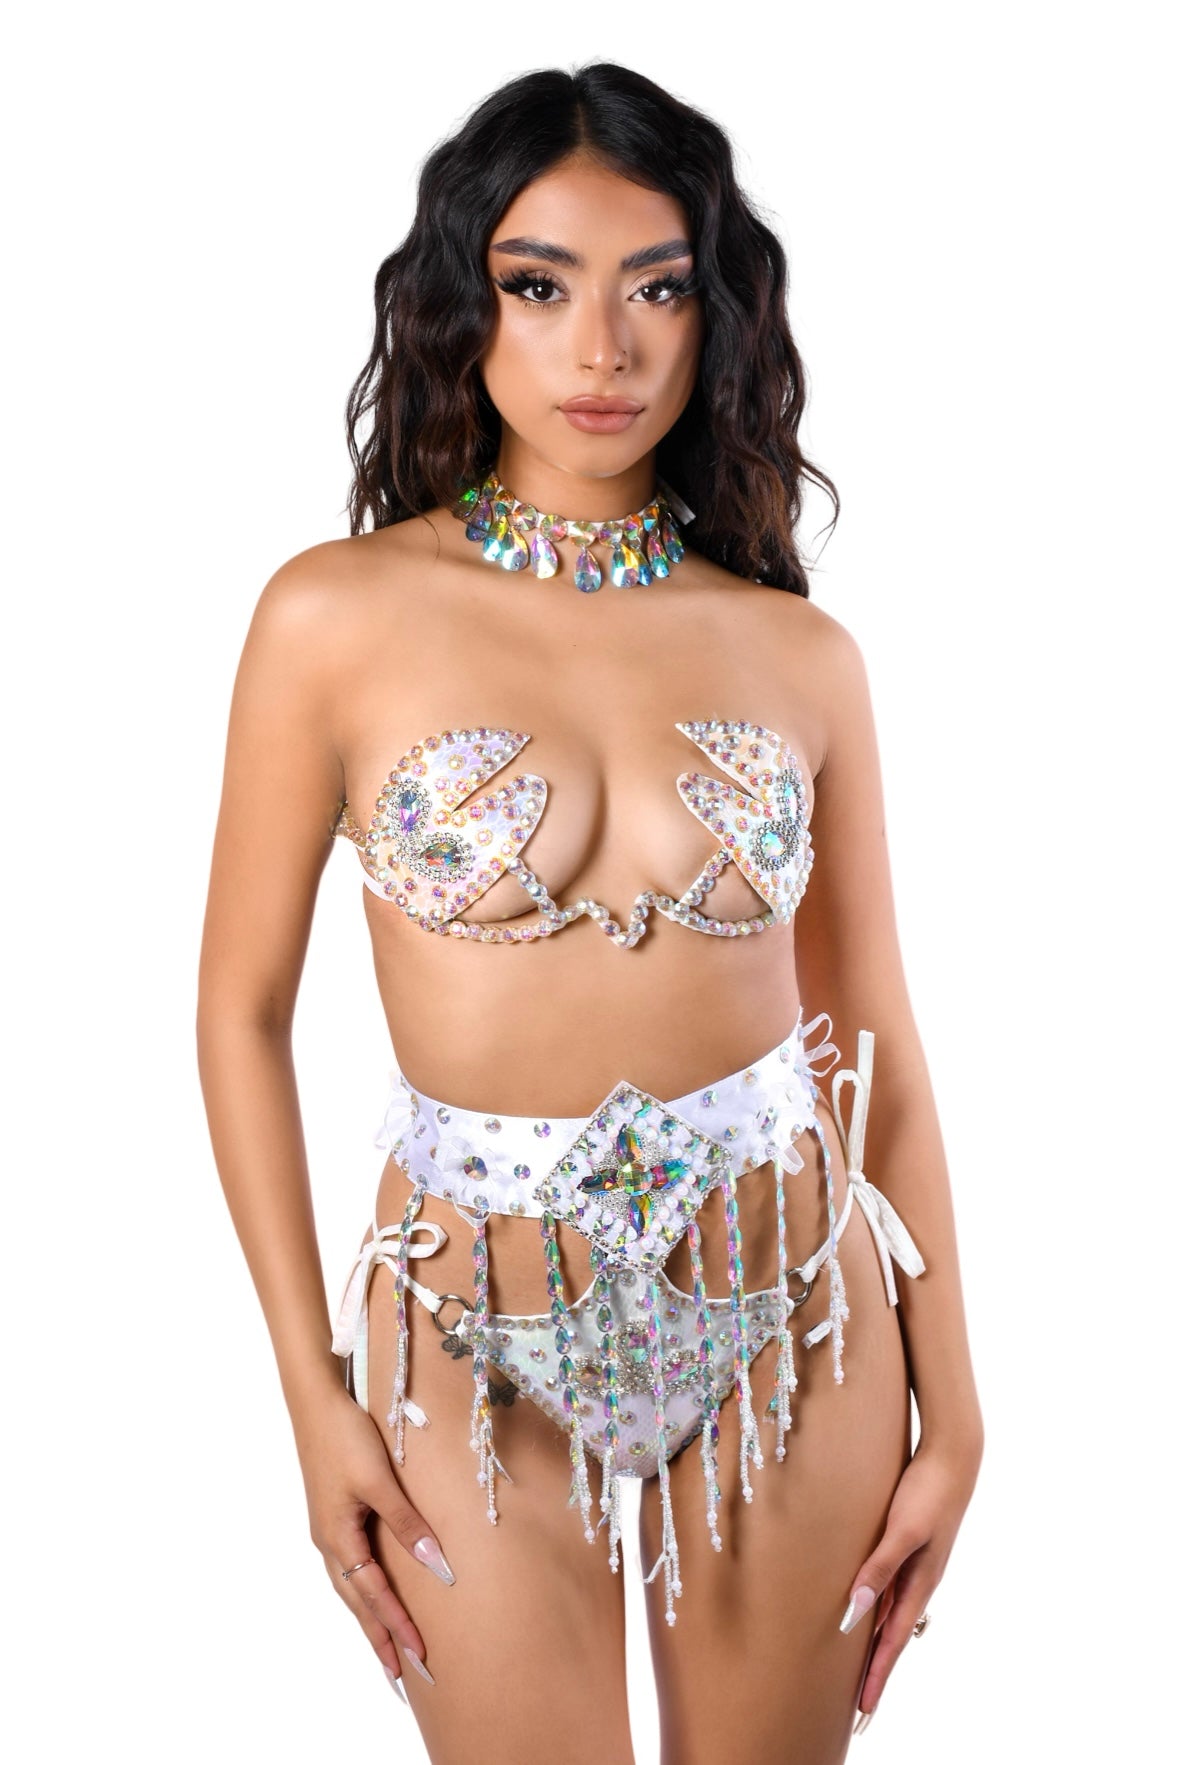 FULL OUTFIT- Carnival Desert Babe (Top+Bottom+Belt+Necklace)